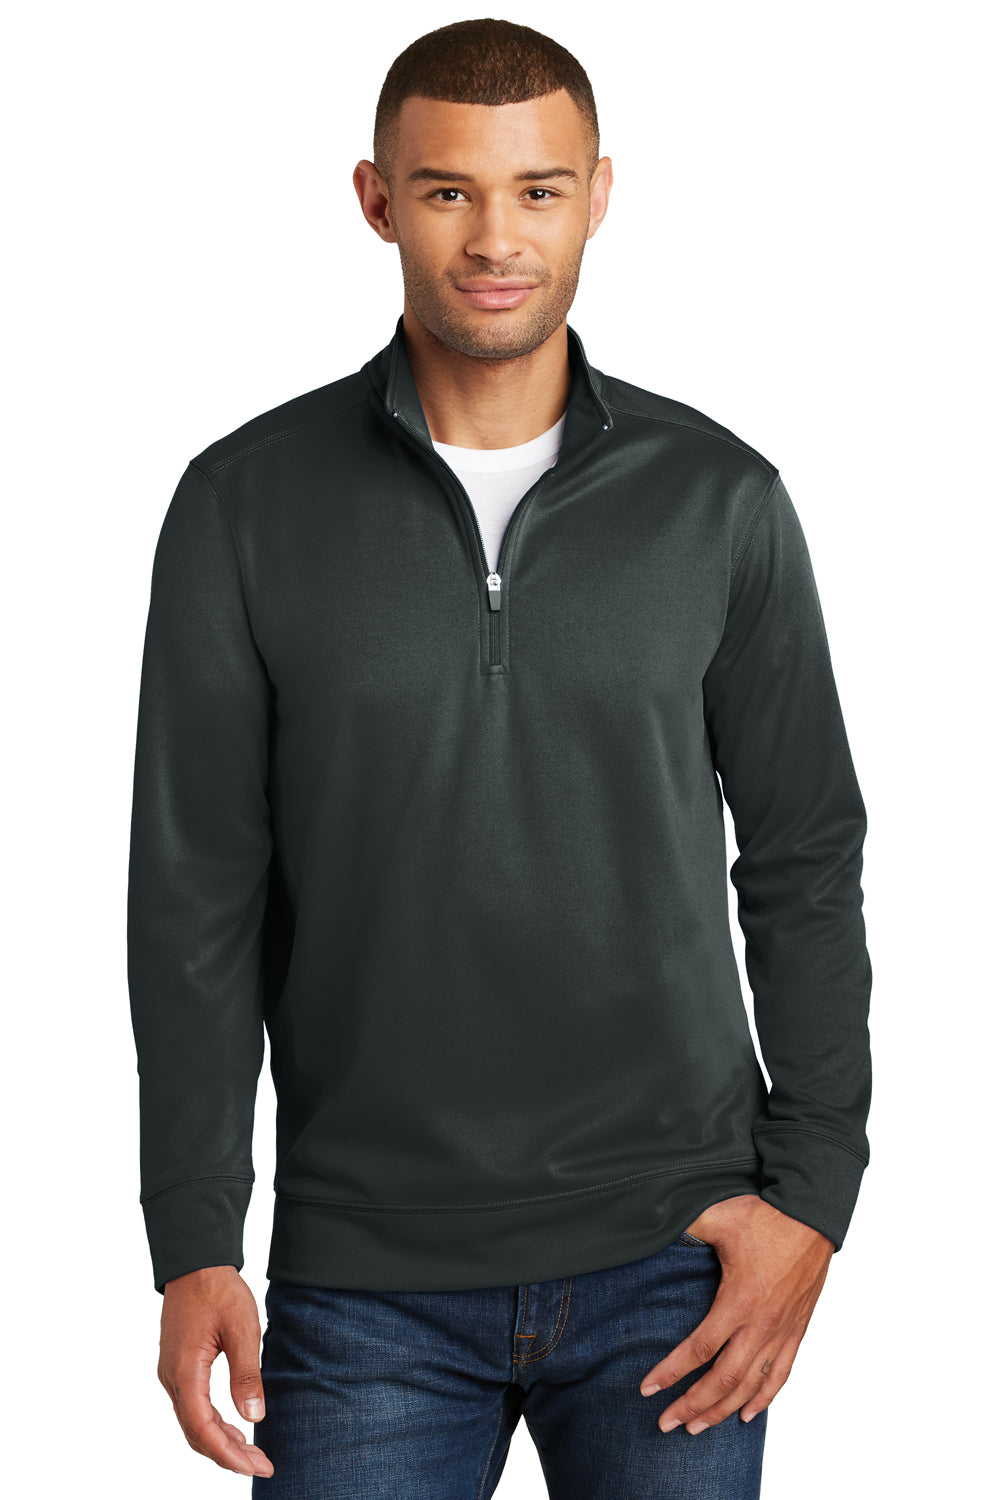 Port & Company PC590Q Mens Dry Zone Performance Moisture Wicking Fleece 1/4 Zip Sweatshirt Black Front